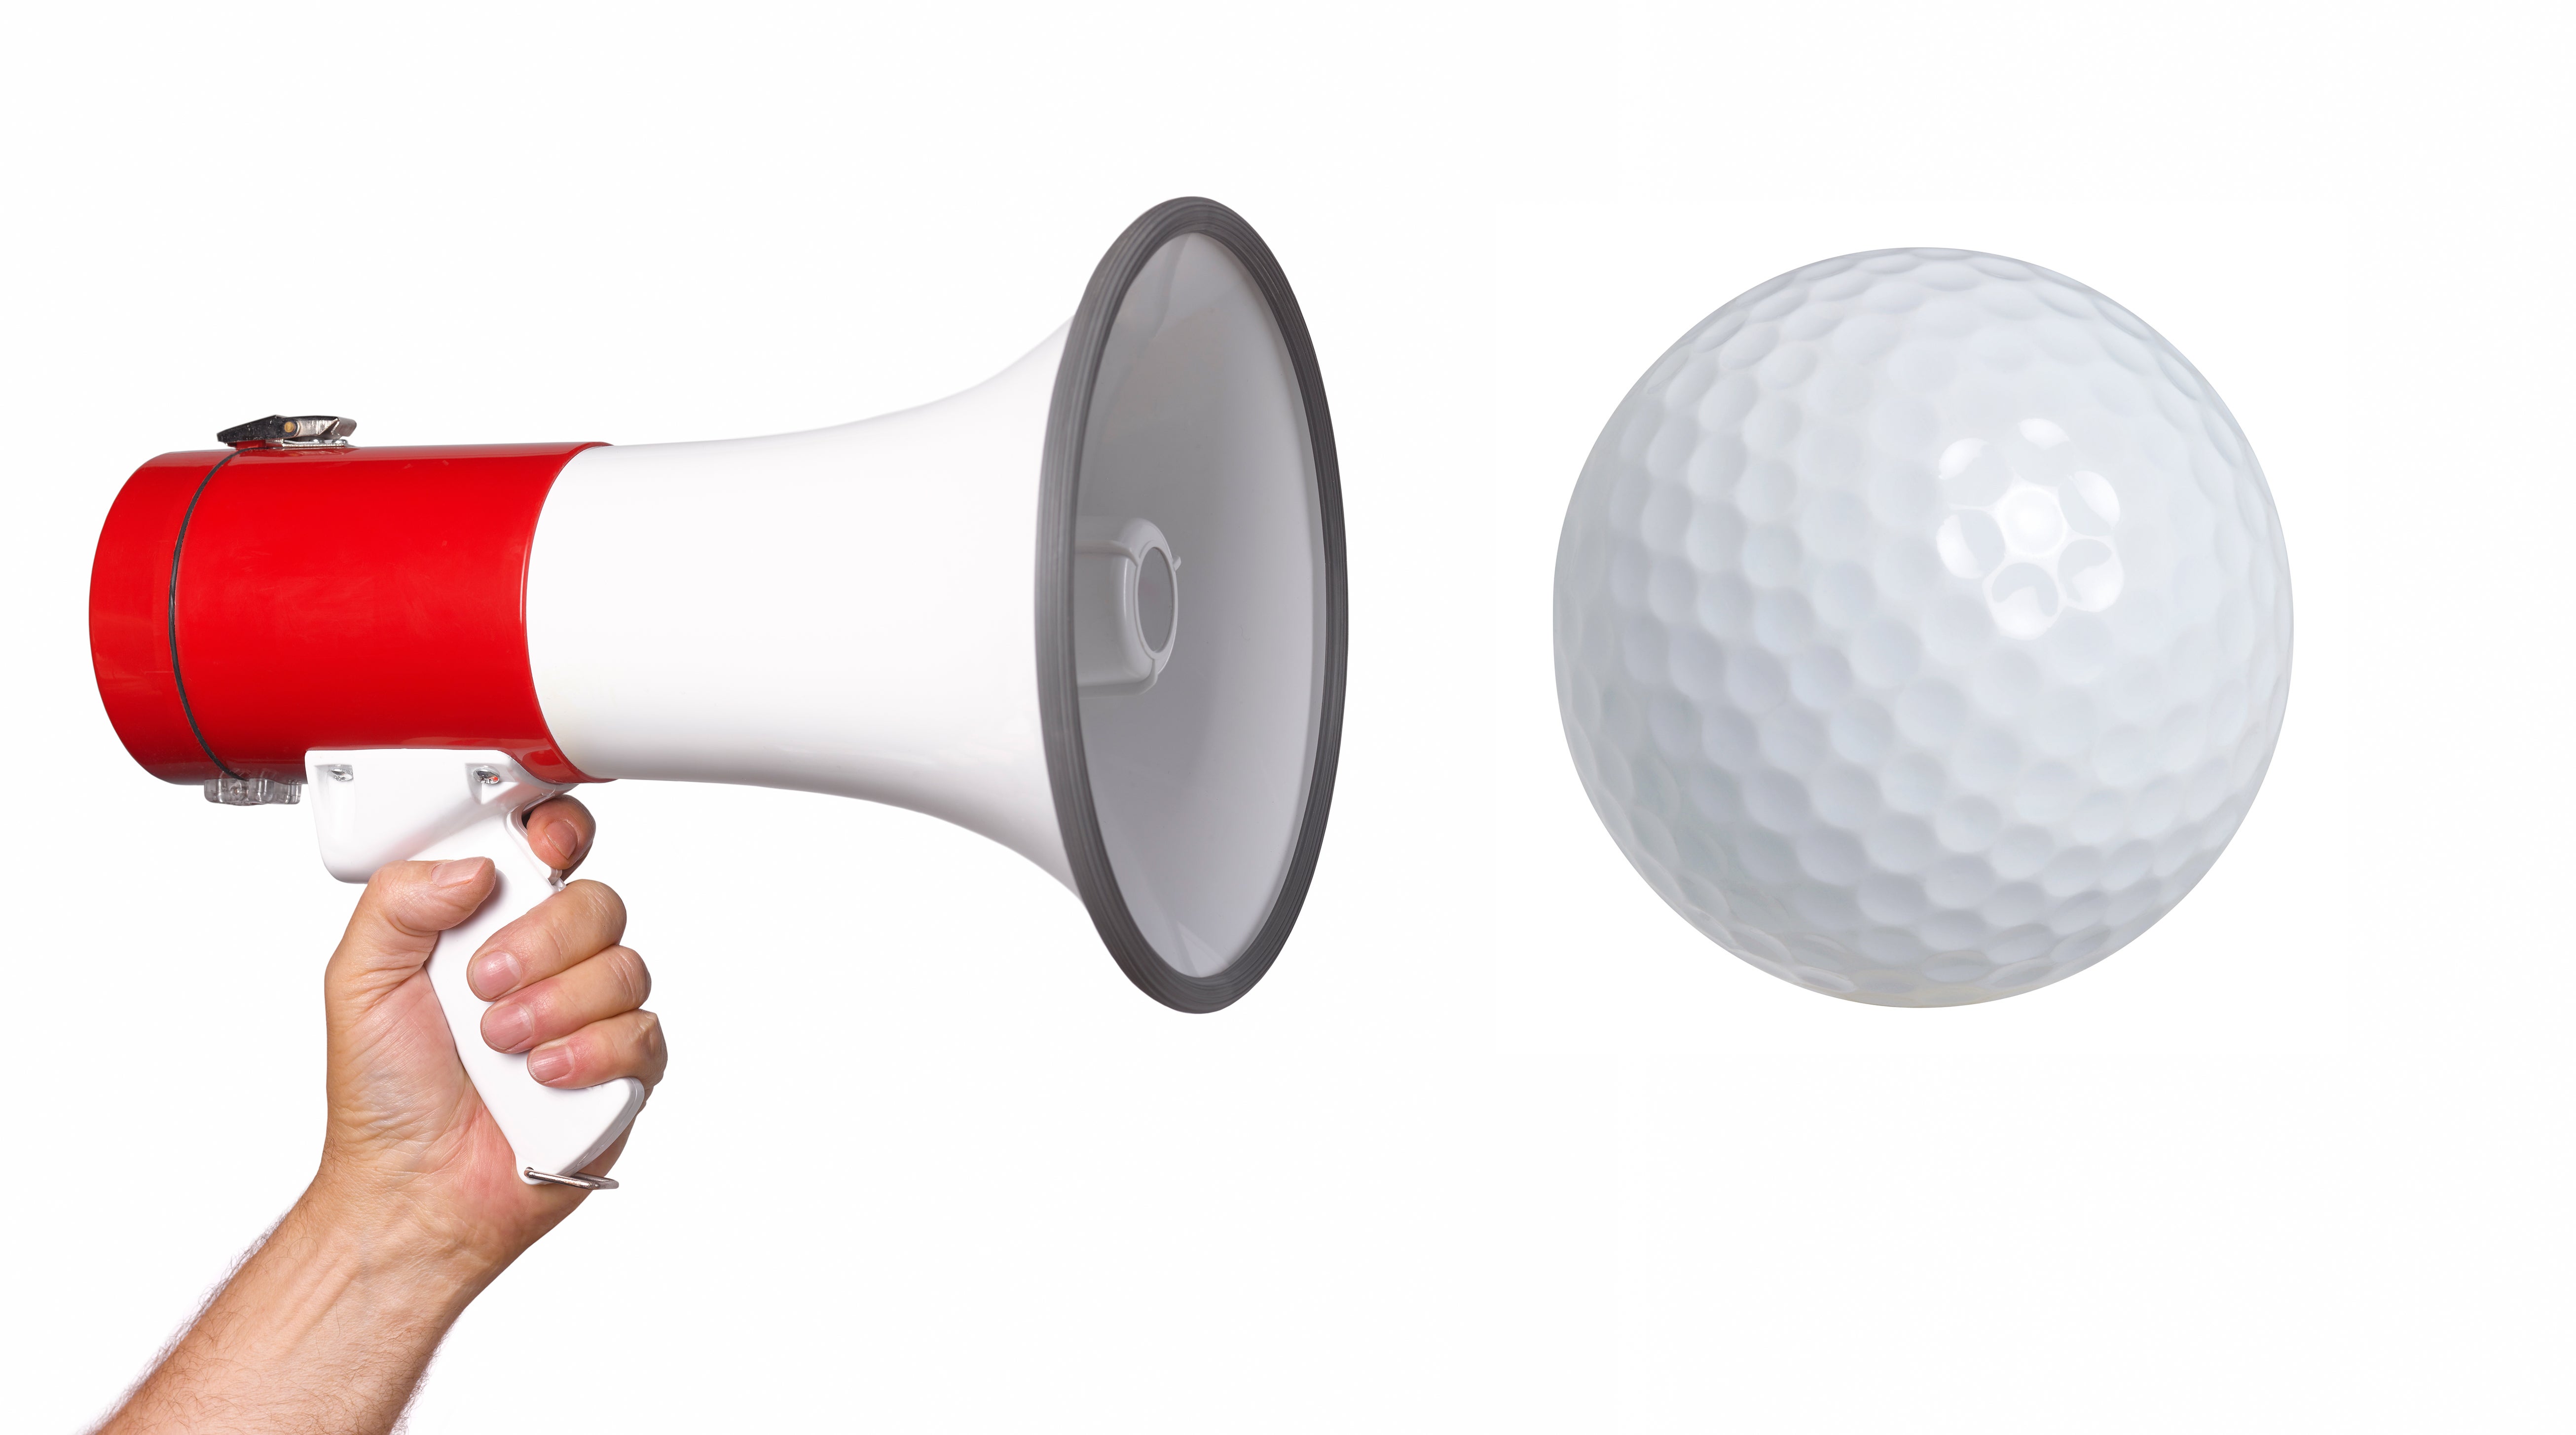 Bullhorn and golf ball